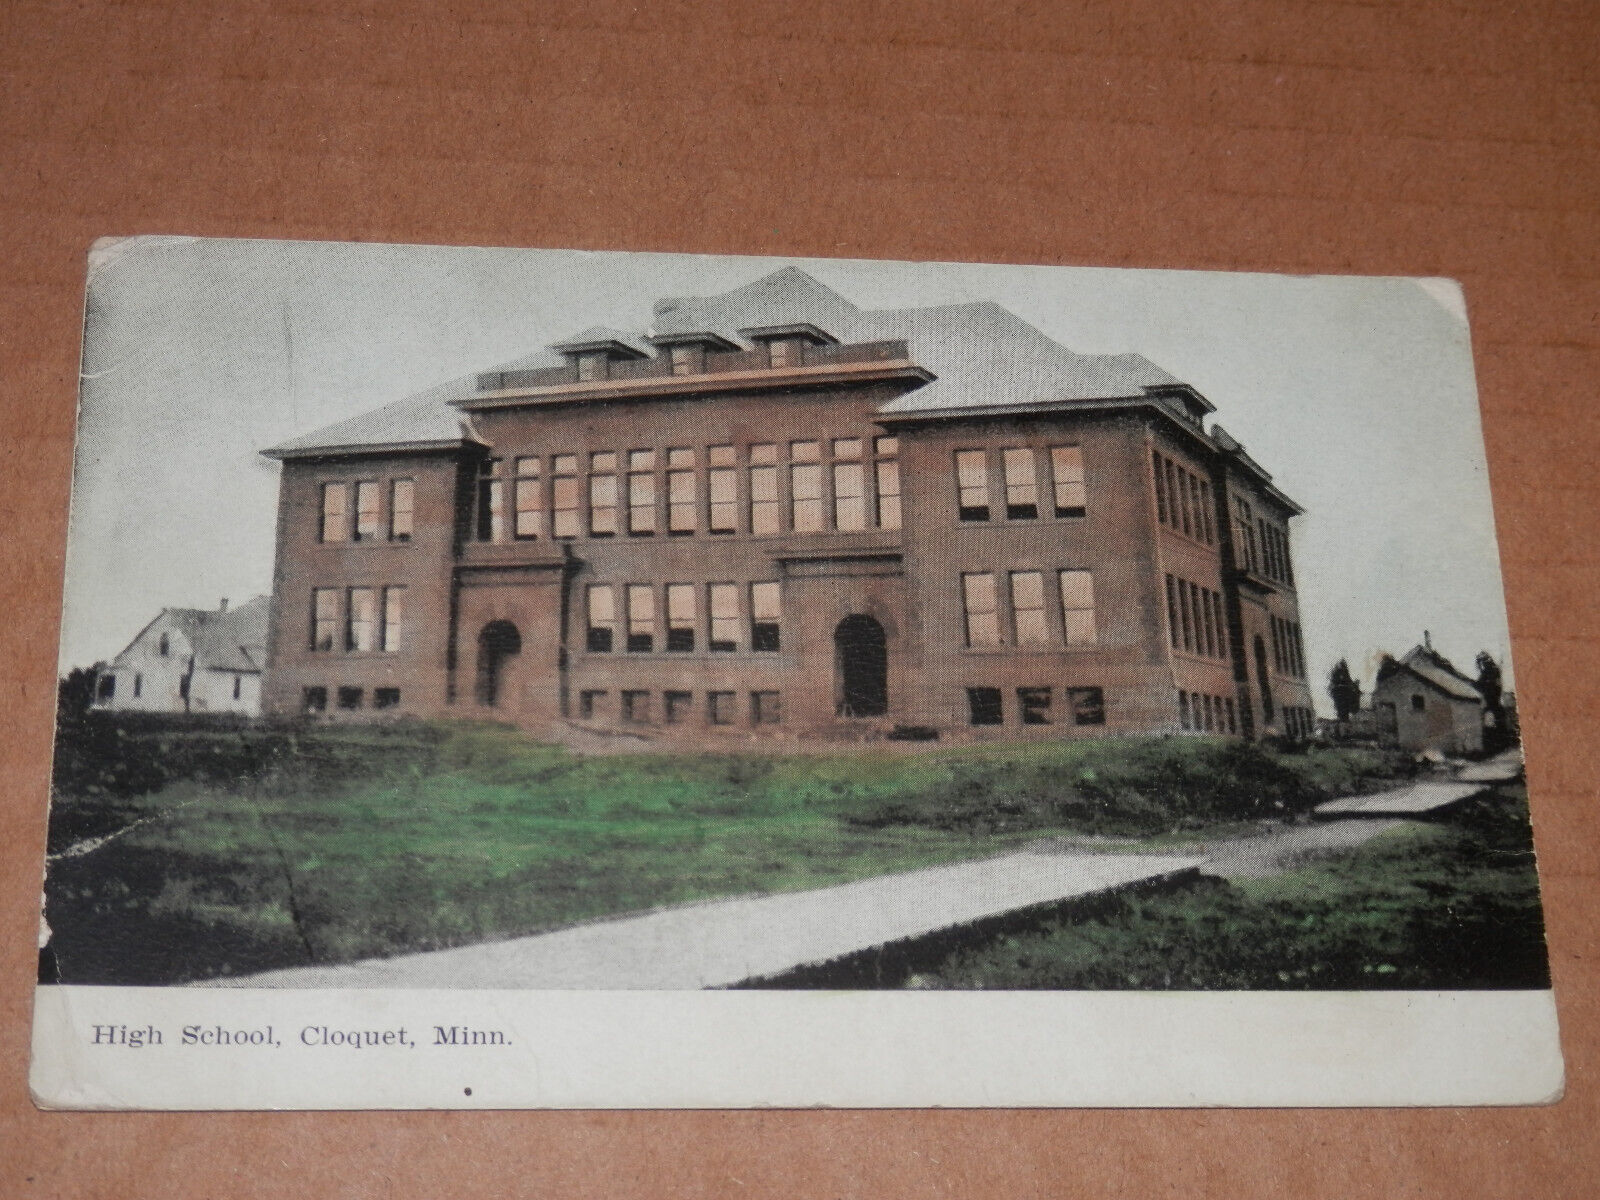 CLOQUET MN - 1907 POSTED POSTCARD - HIGH SCHOOL - BROOKSTON - CARLTON COUNTY